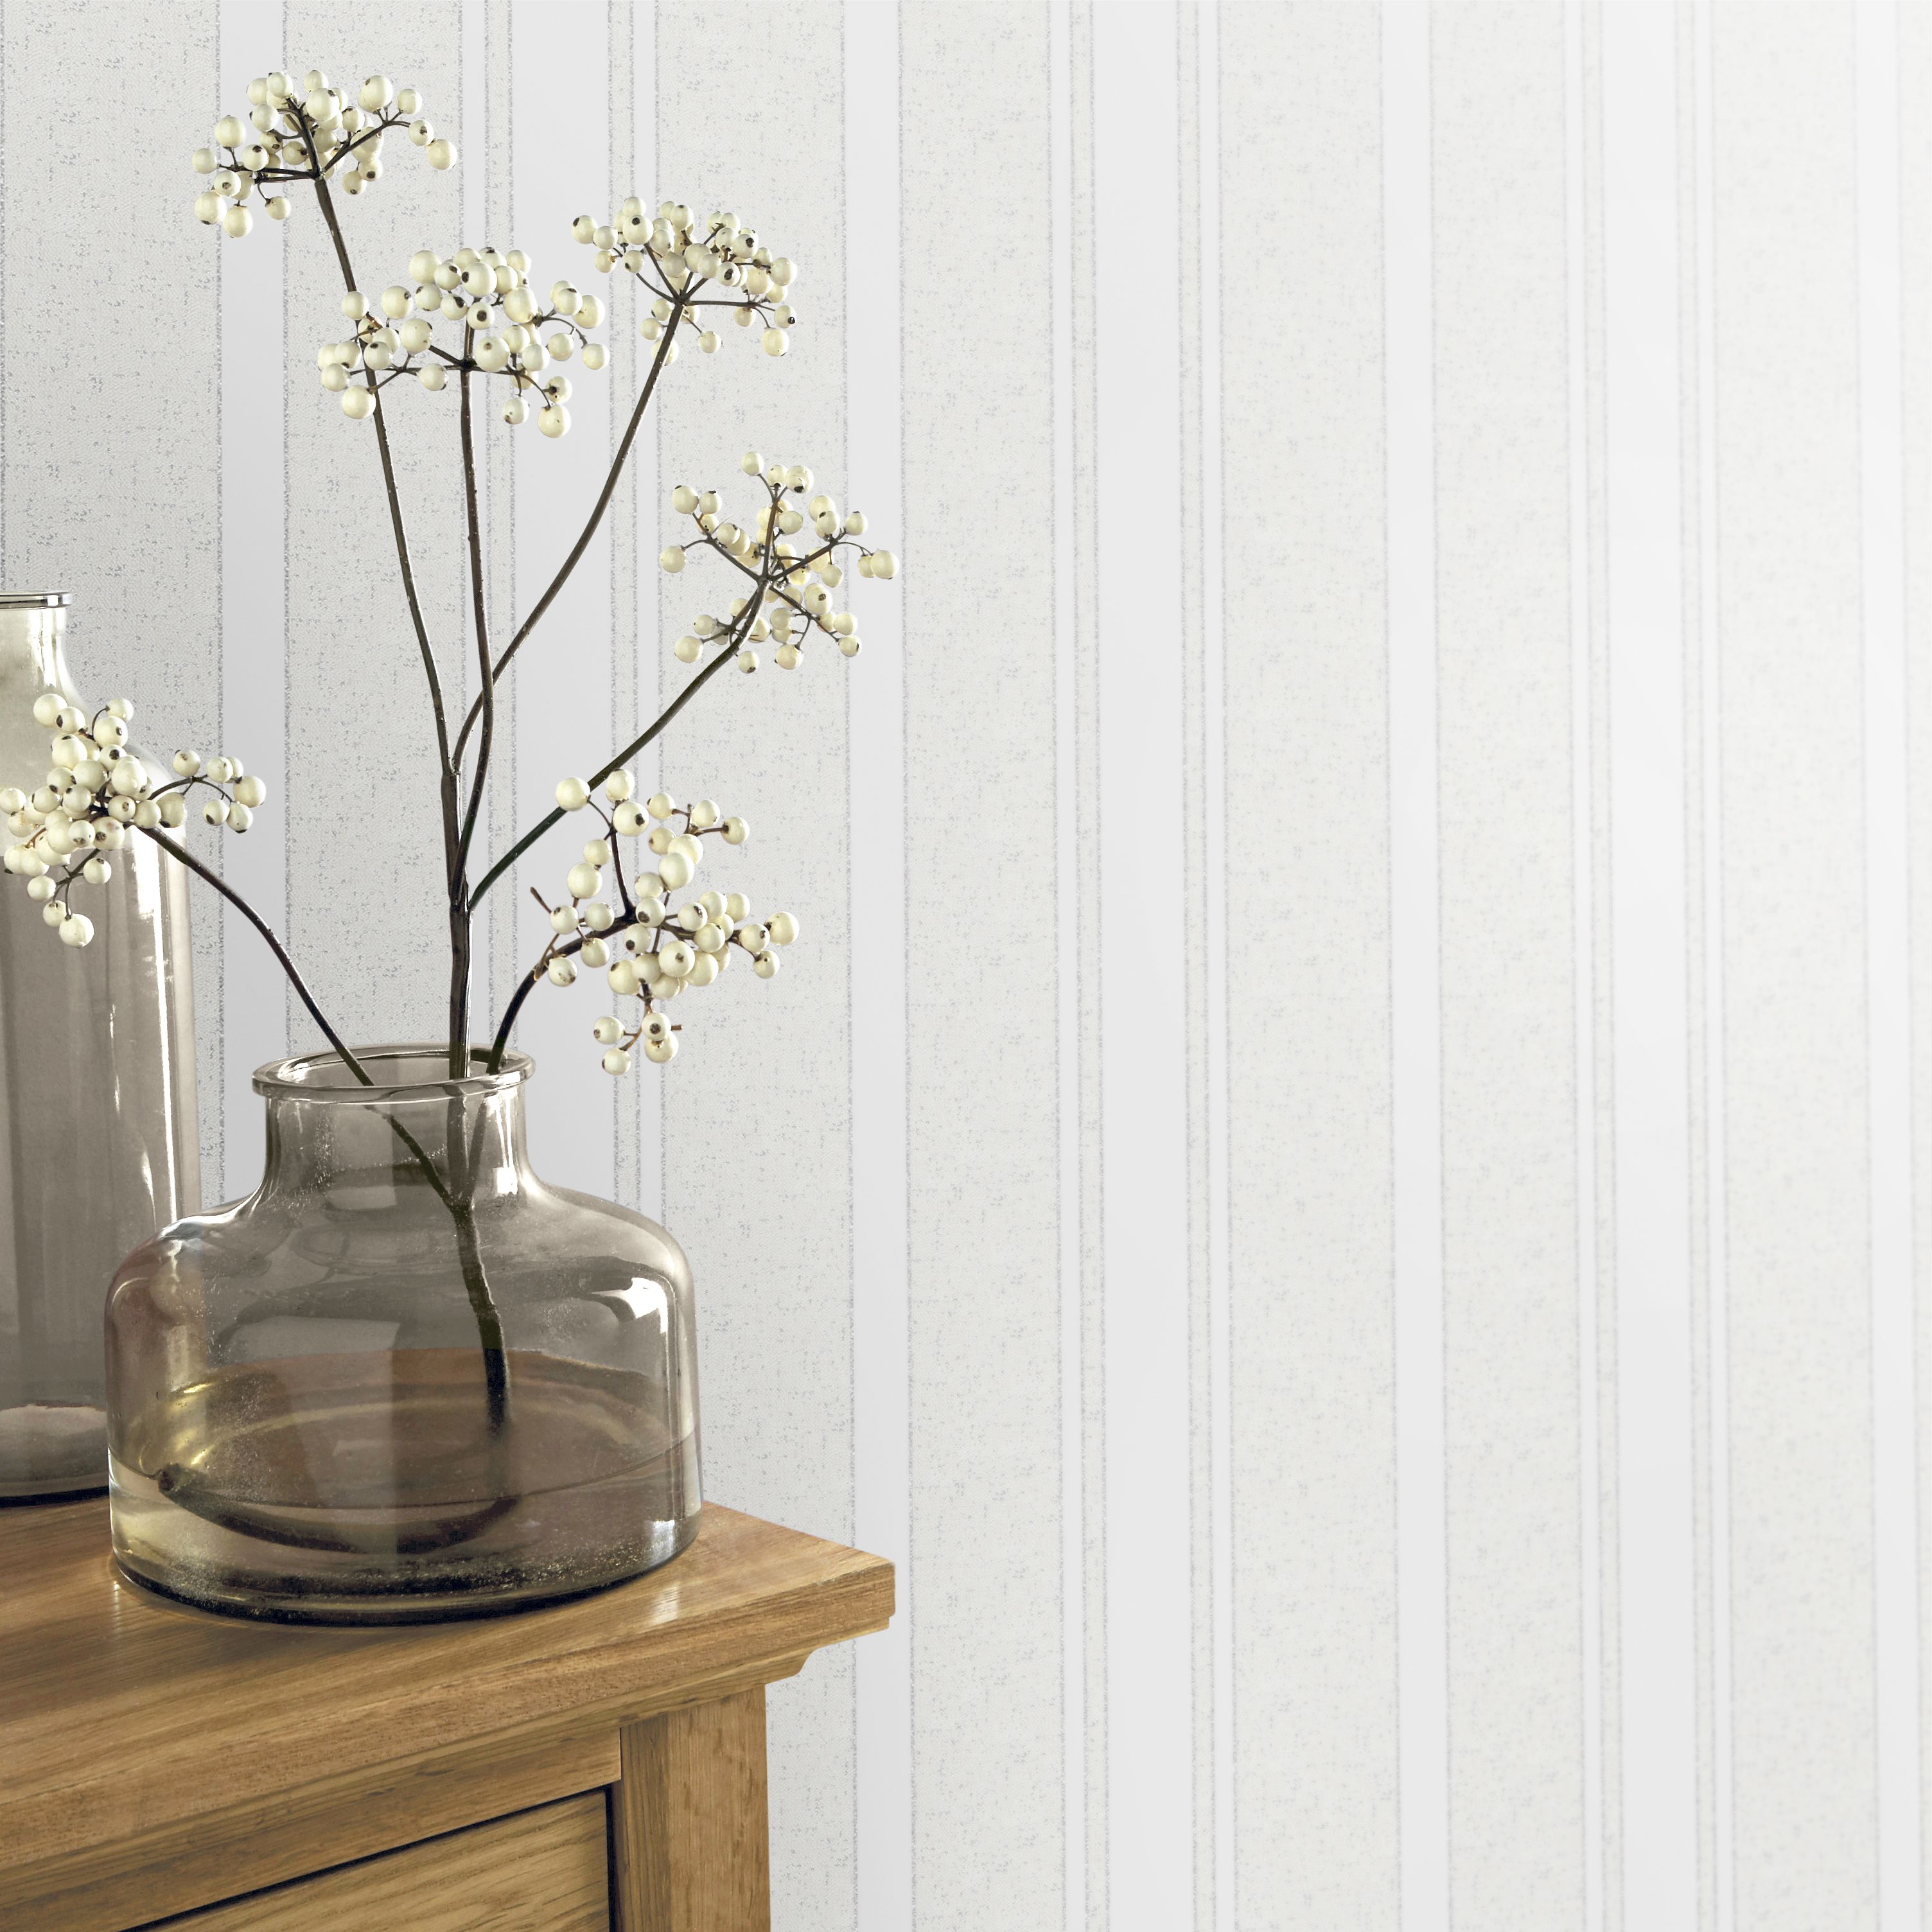 GoodHome Solfia White Striped Glitter effect Textured Wallpaper Sample